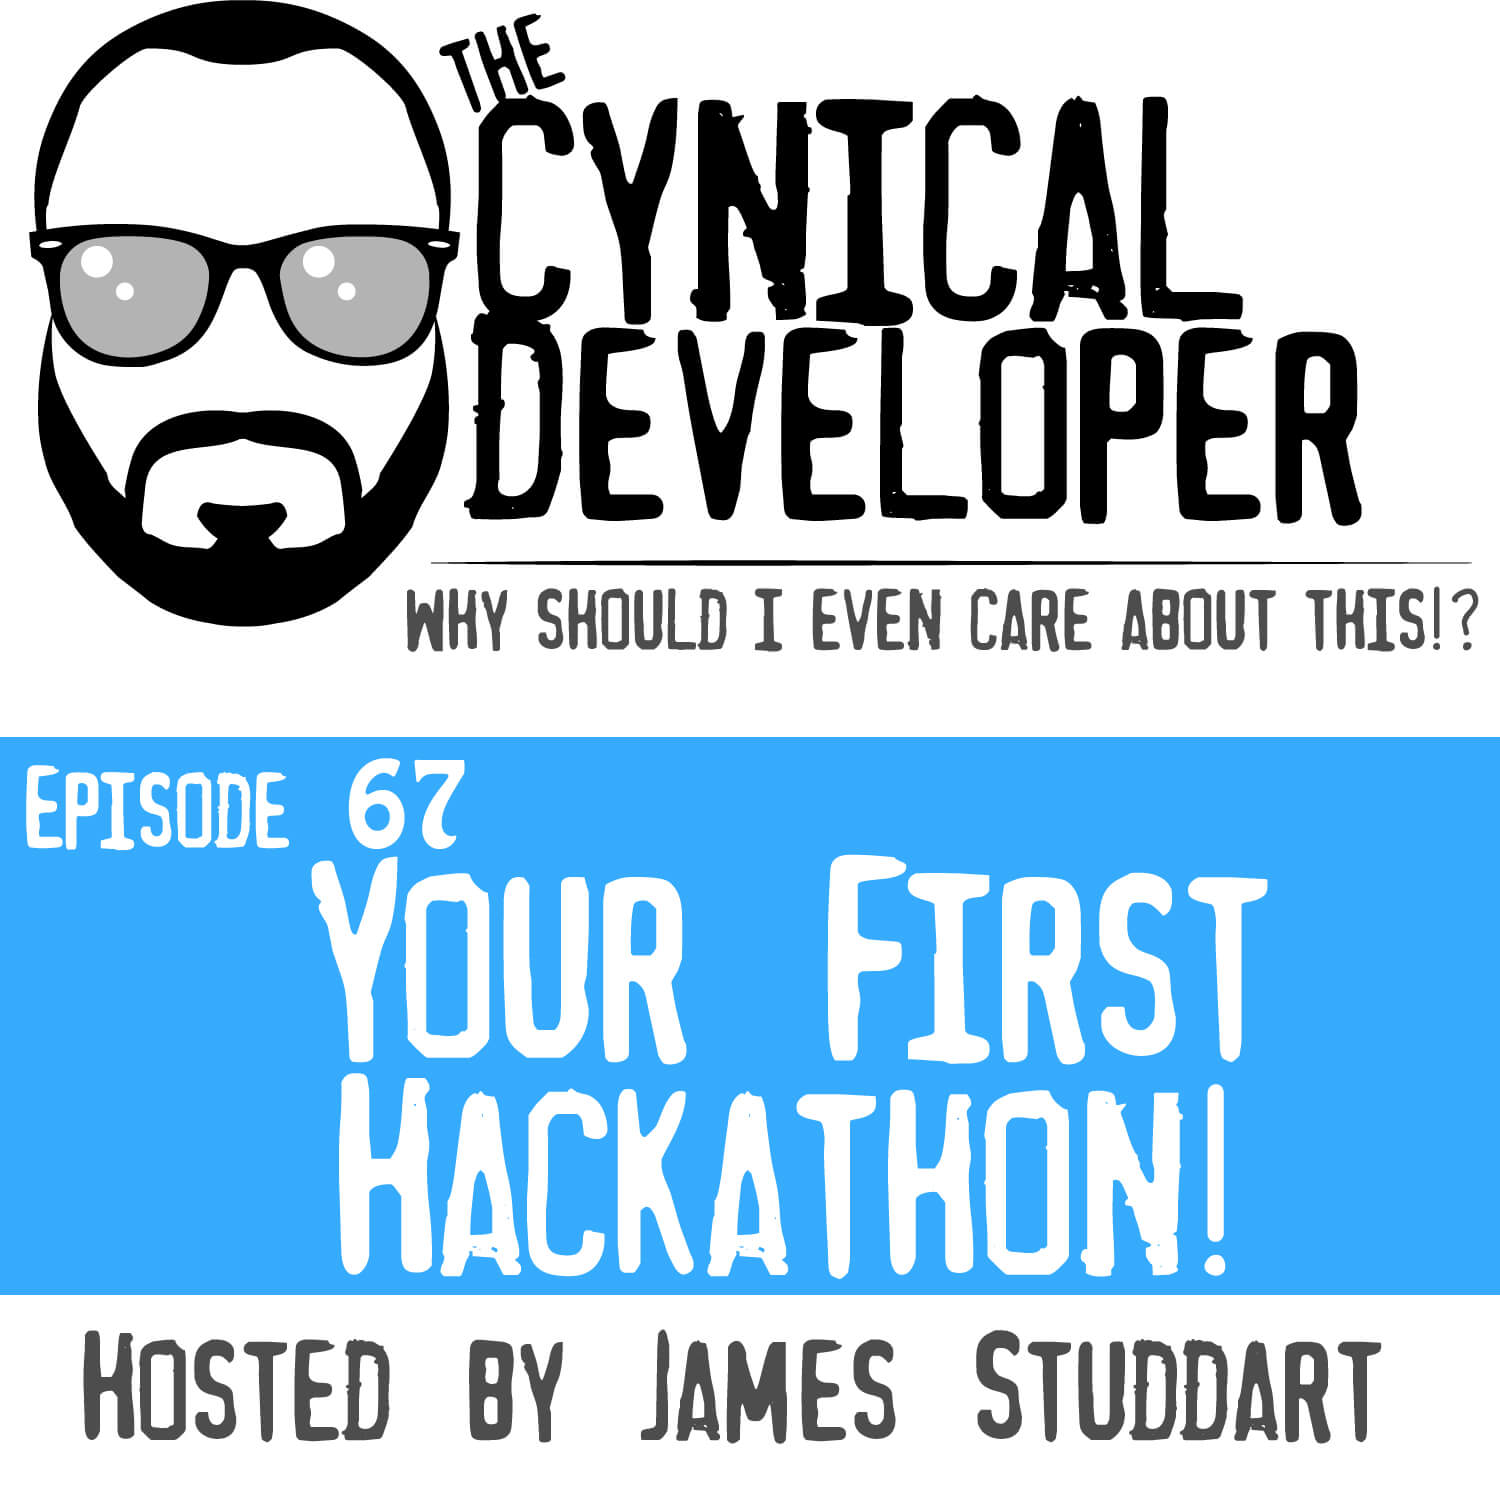 Episode 67 - Your First Hackathon